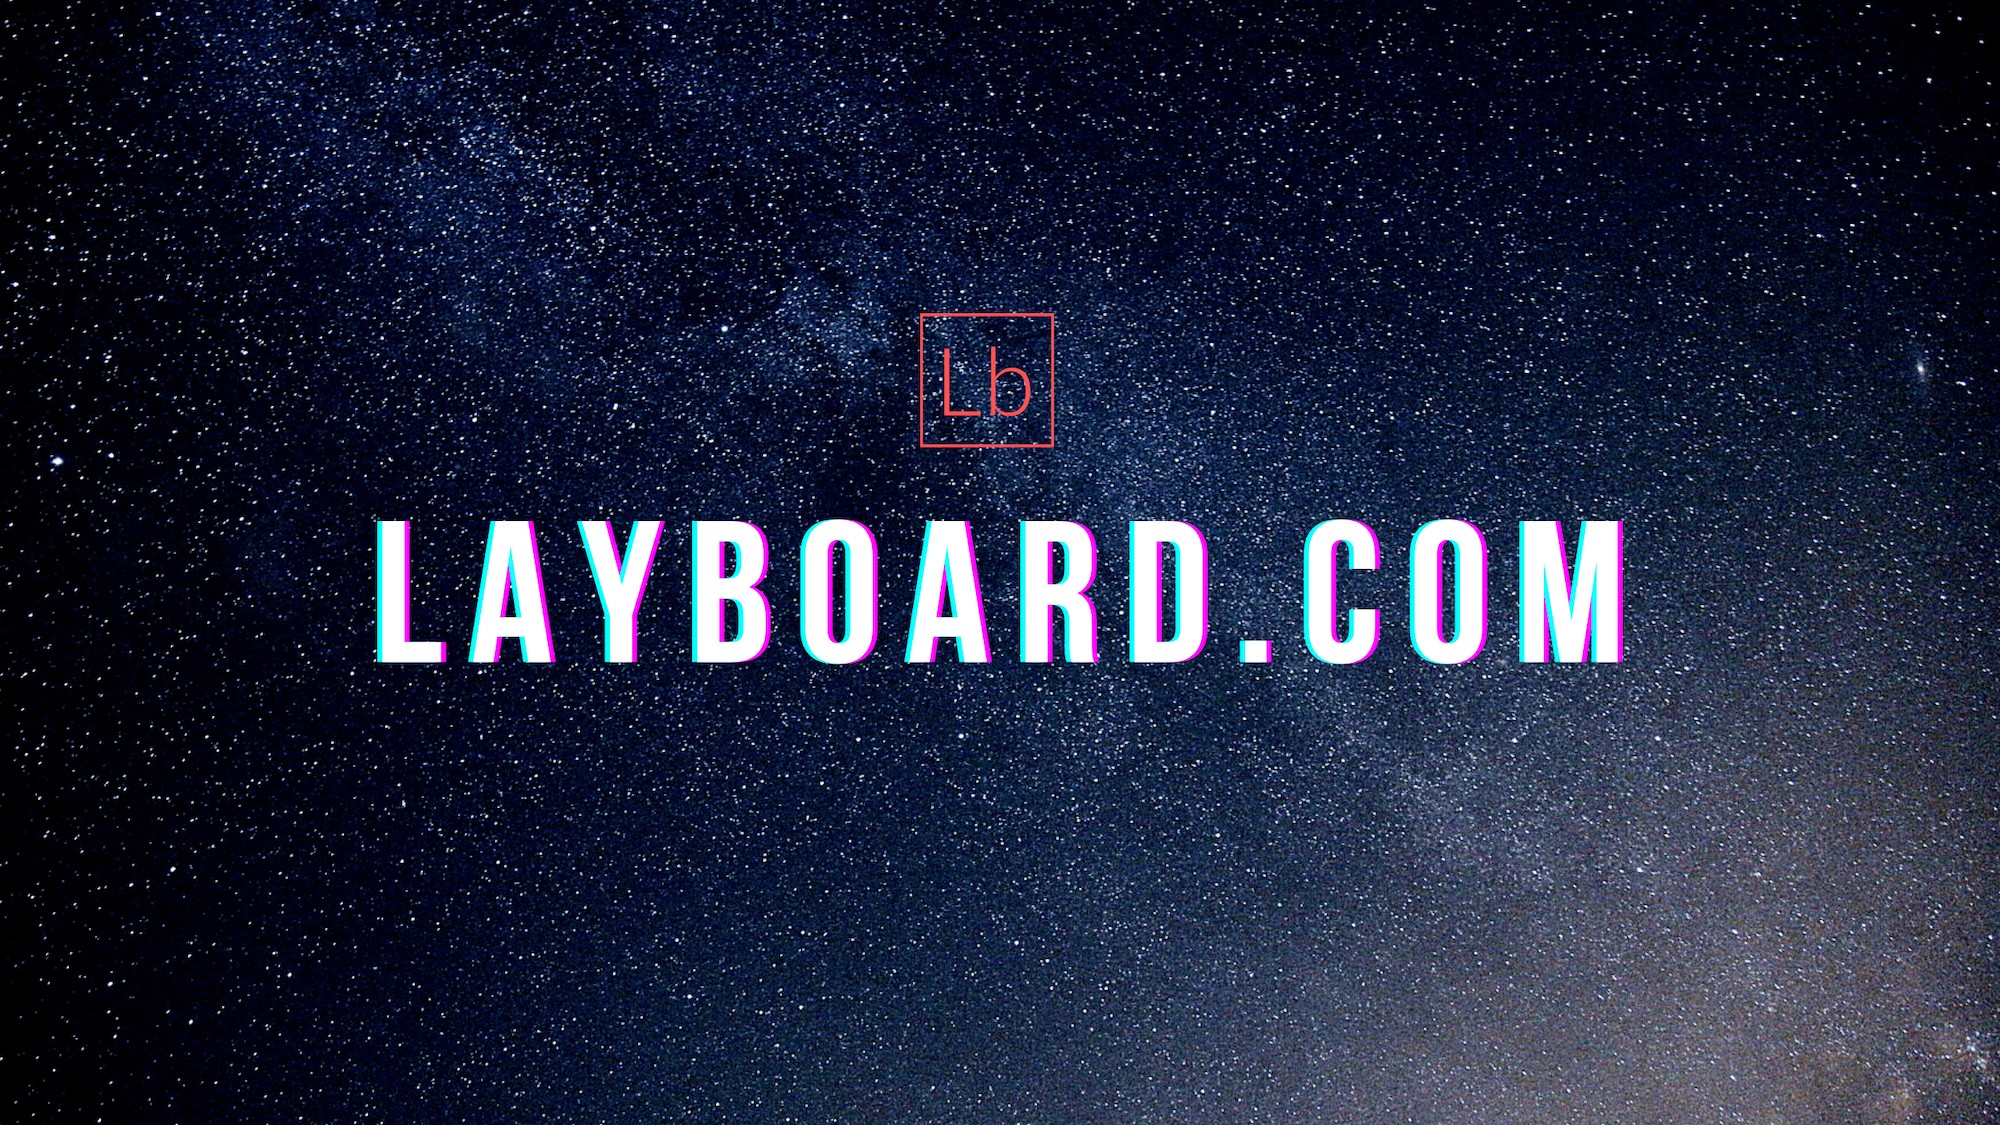 Layboard.com;